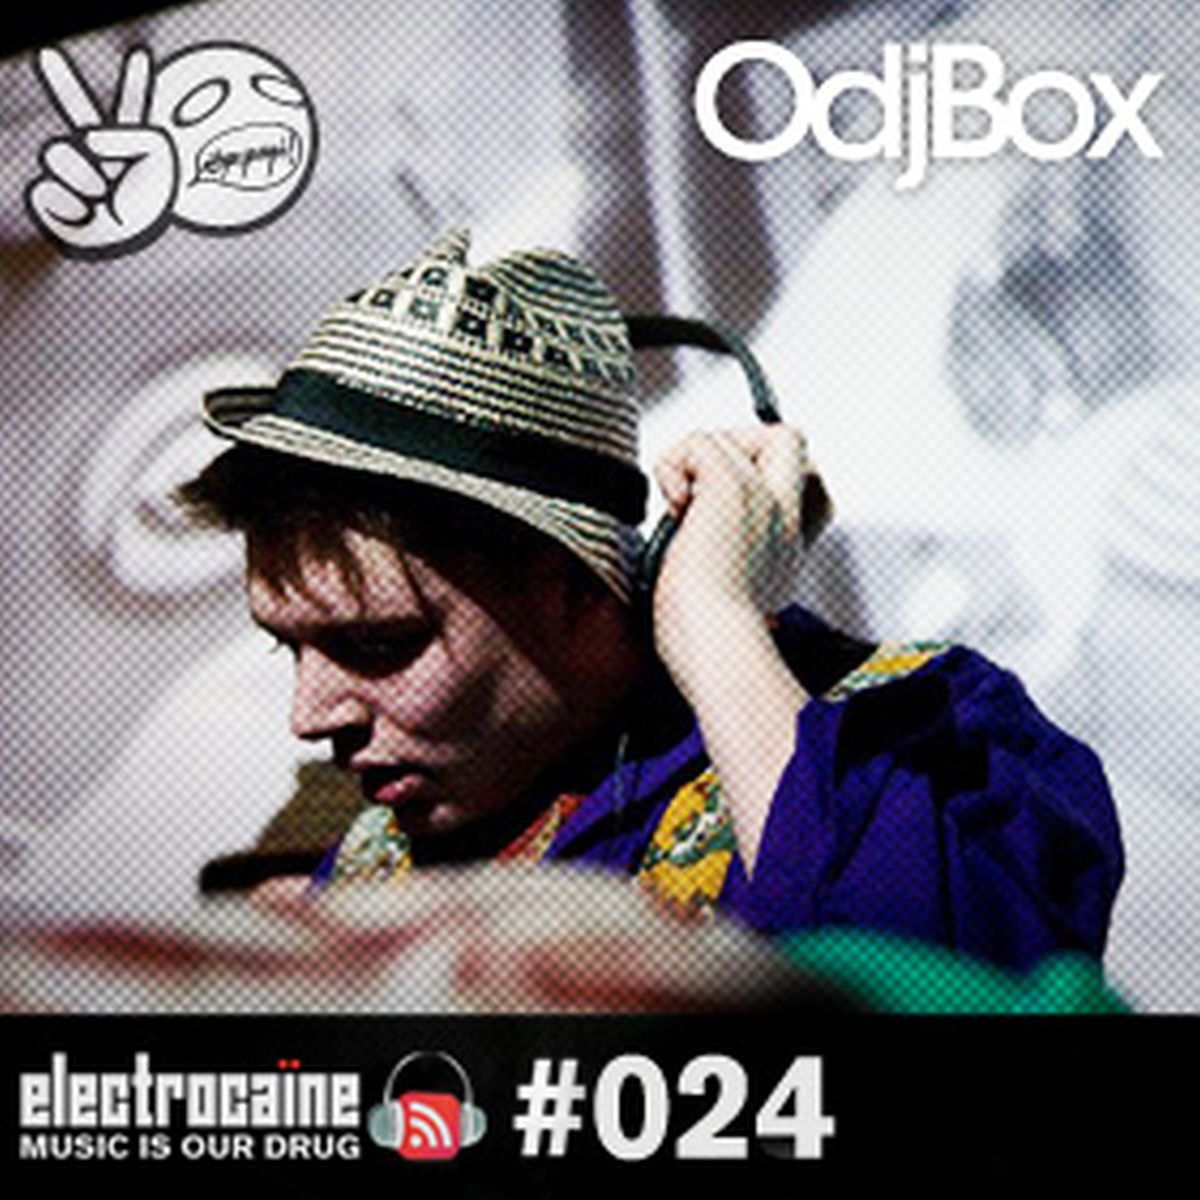 session #024 - OdjBox (uk)